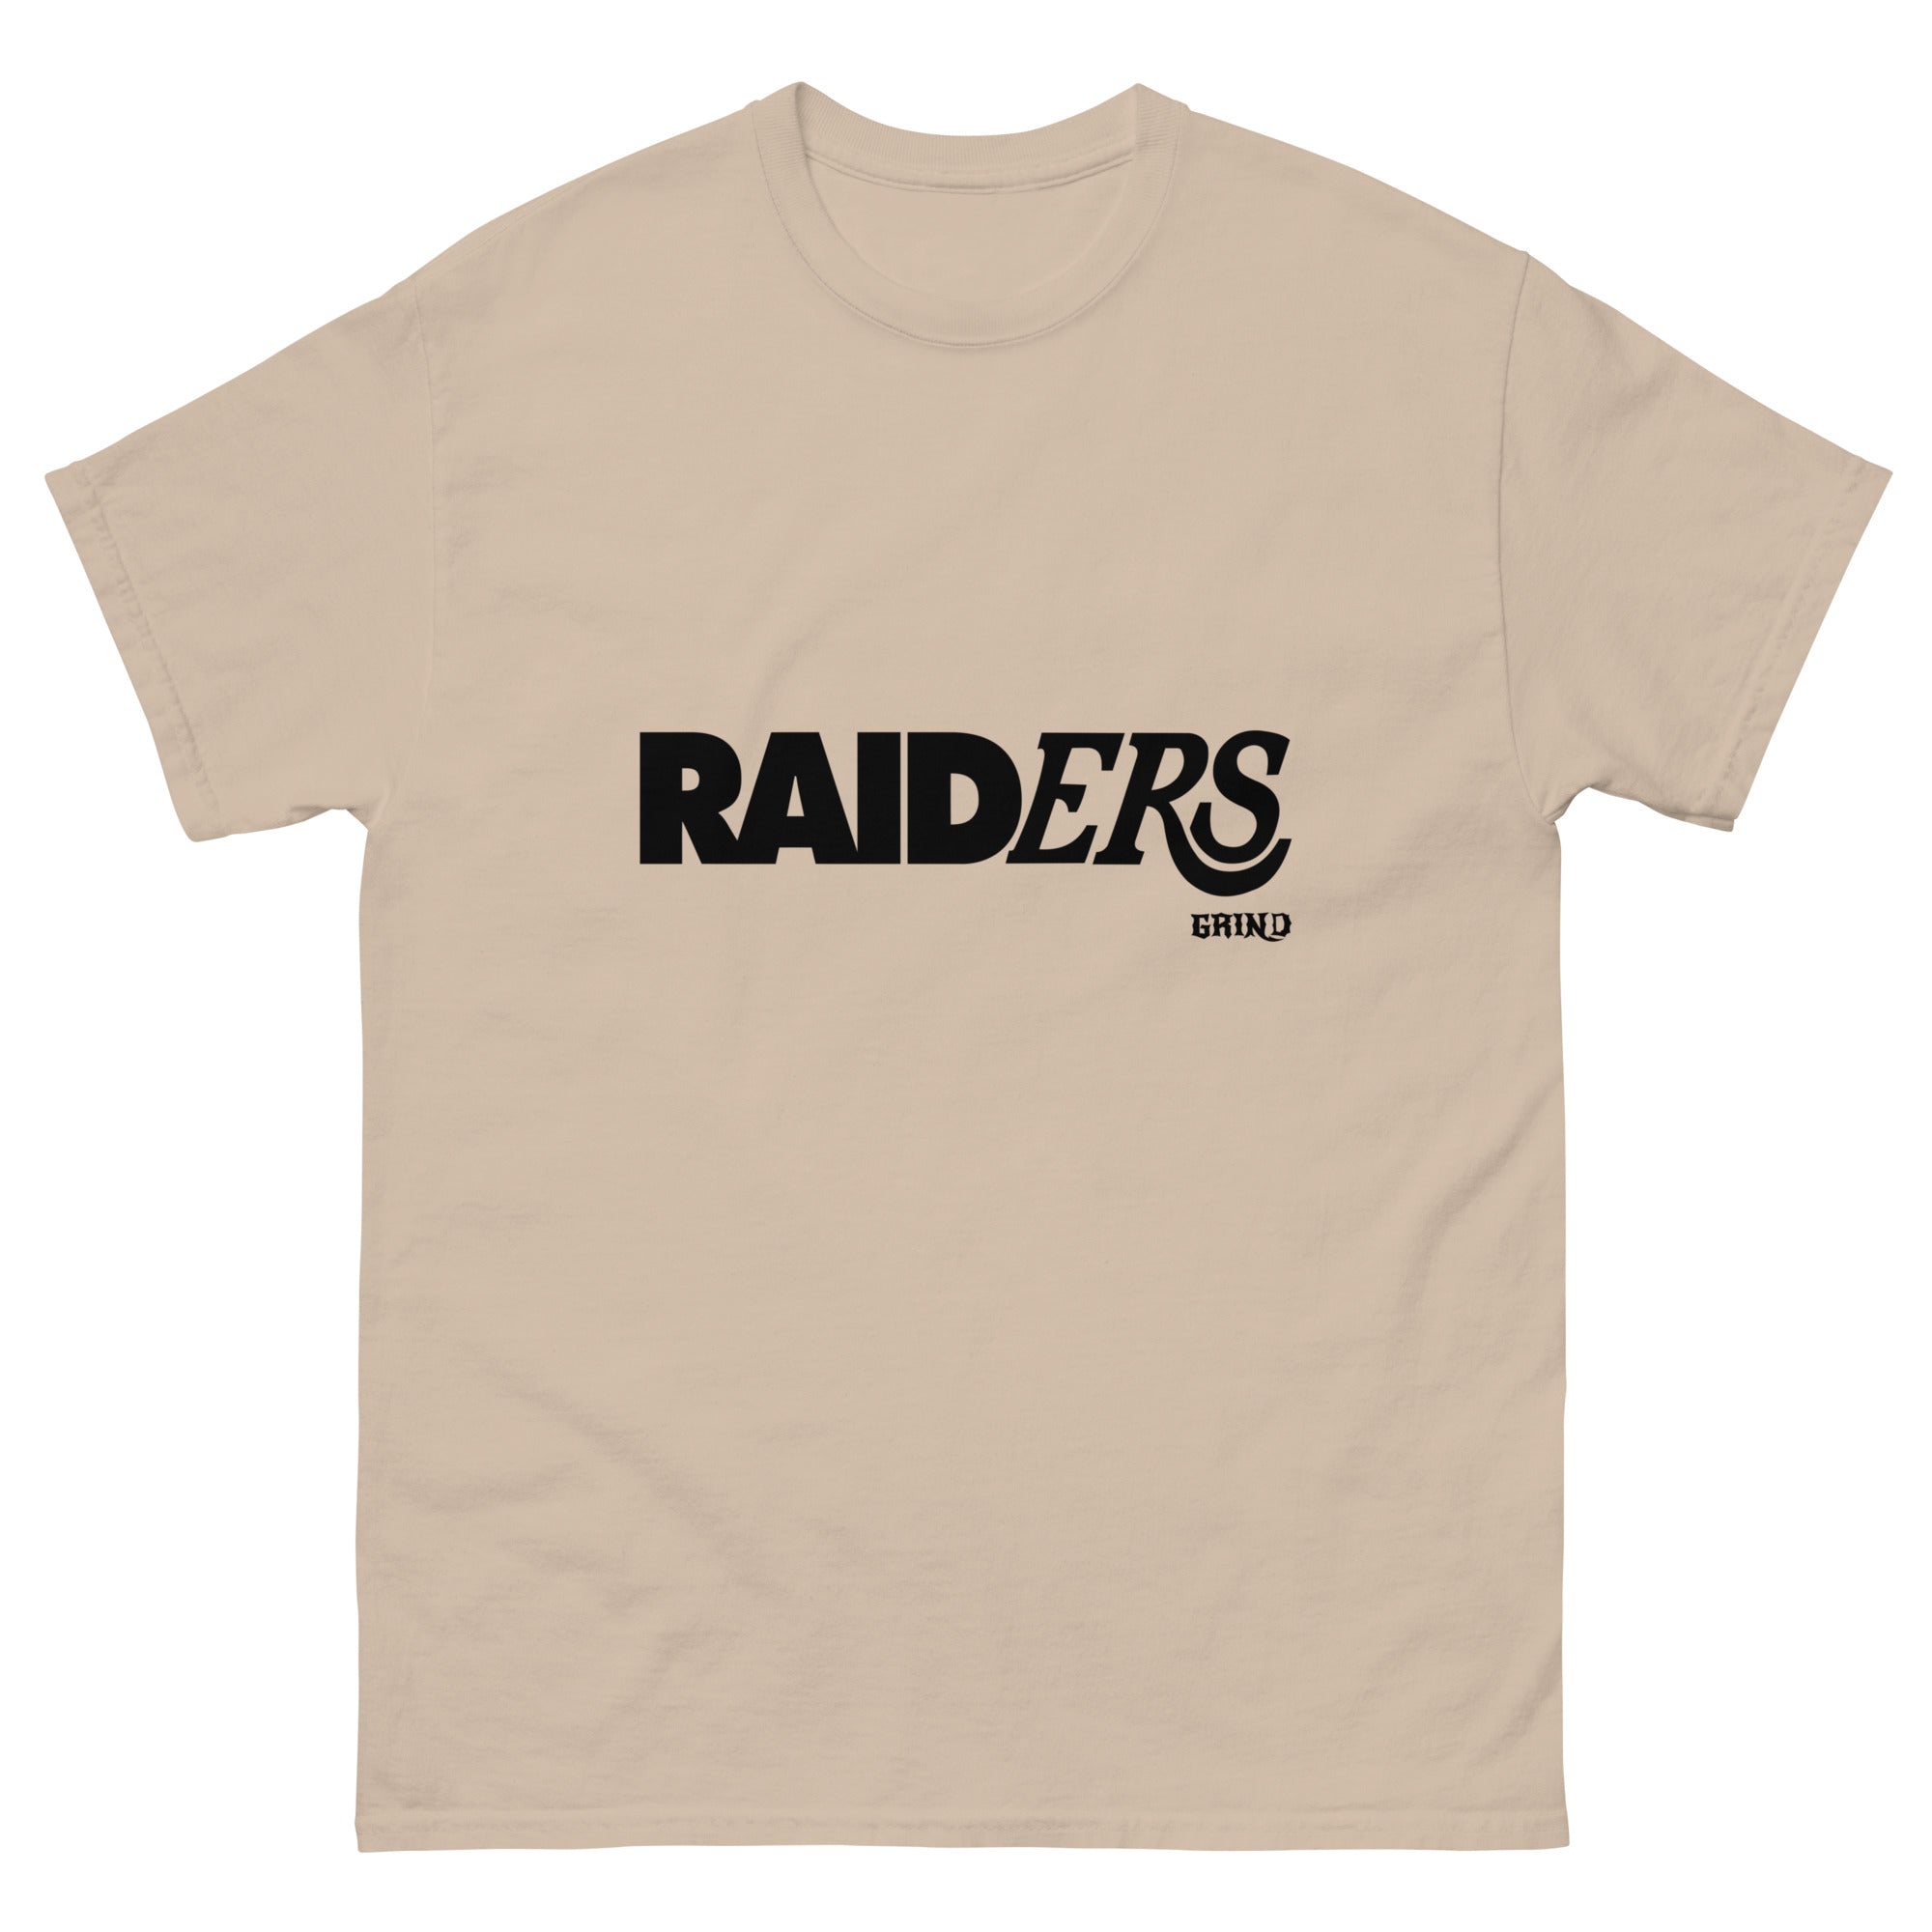 GRIND Raider Lakers Shirt (Light Colors)